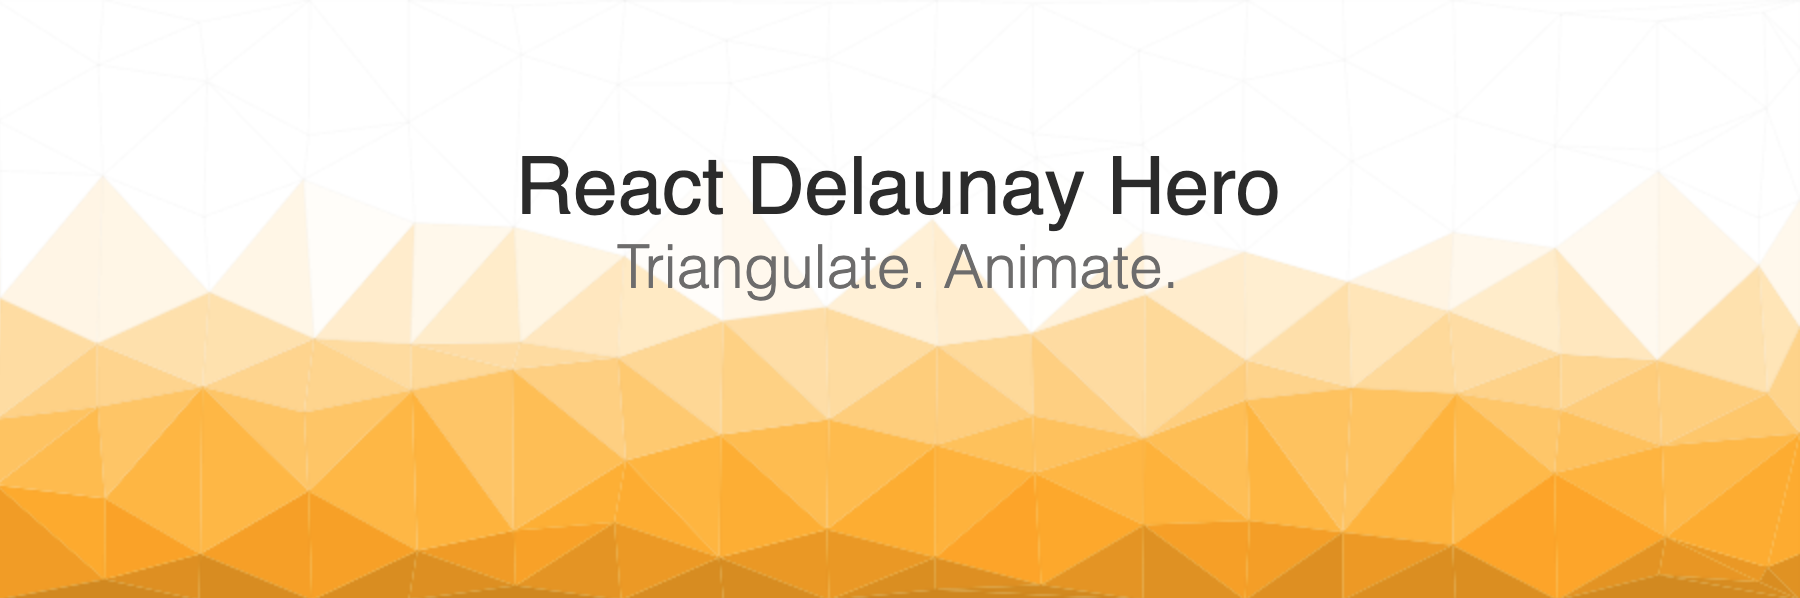 Sample React Delaunay Hero